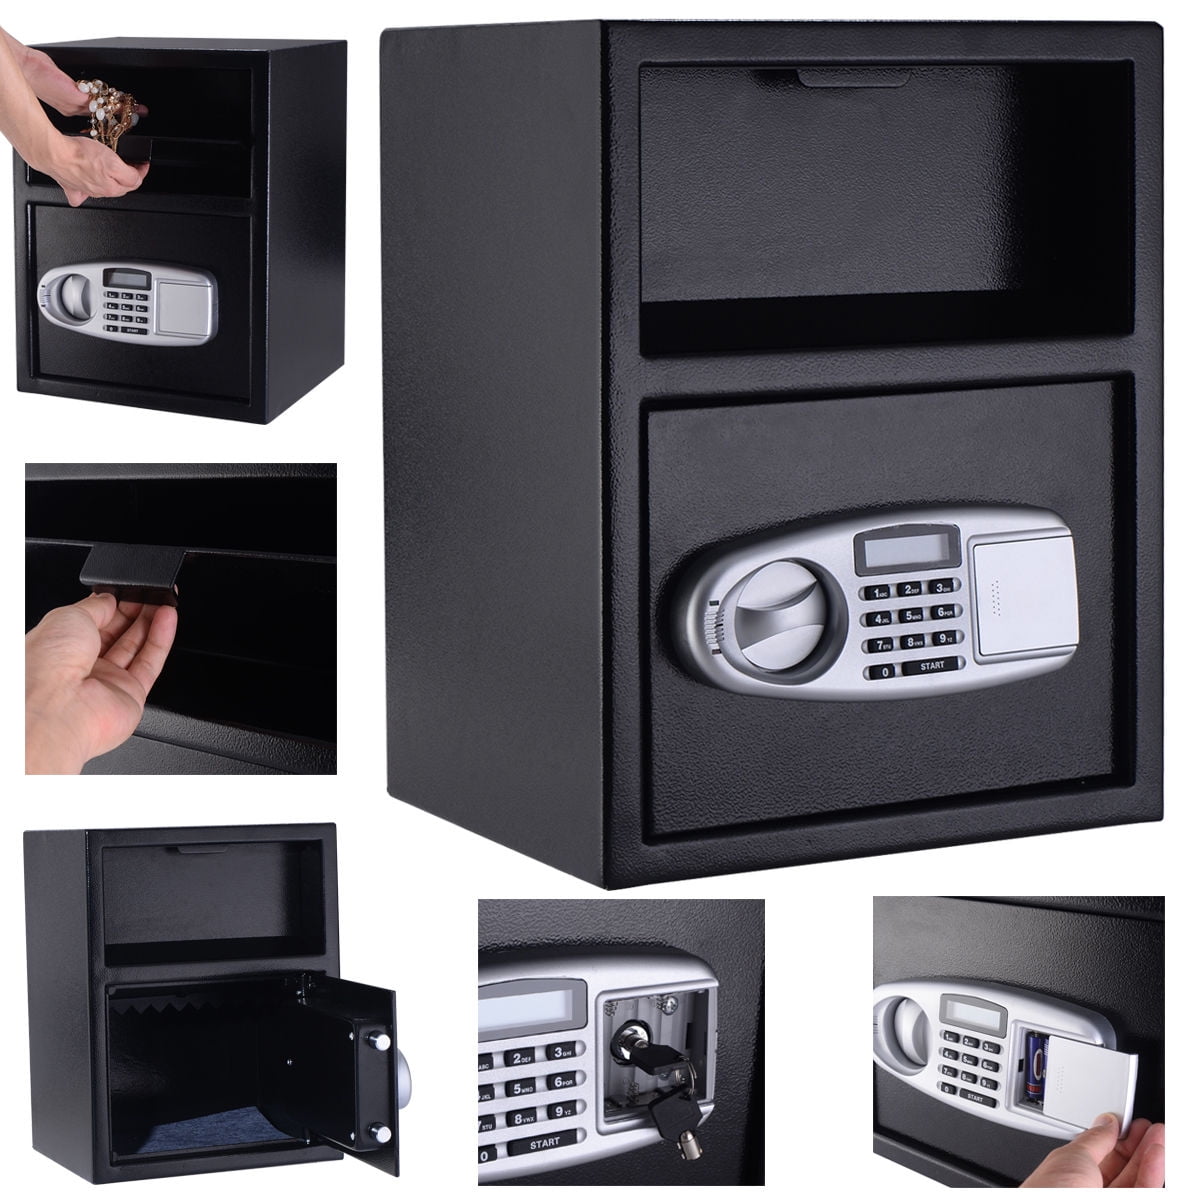 Costway Large Digital Electronic Keypad Lock Security Gun Safe Box Home Office 